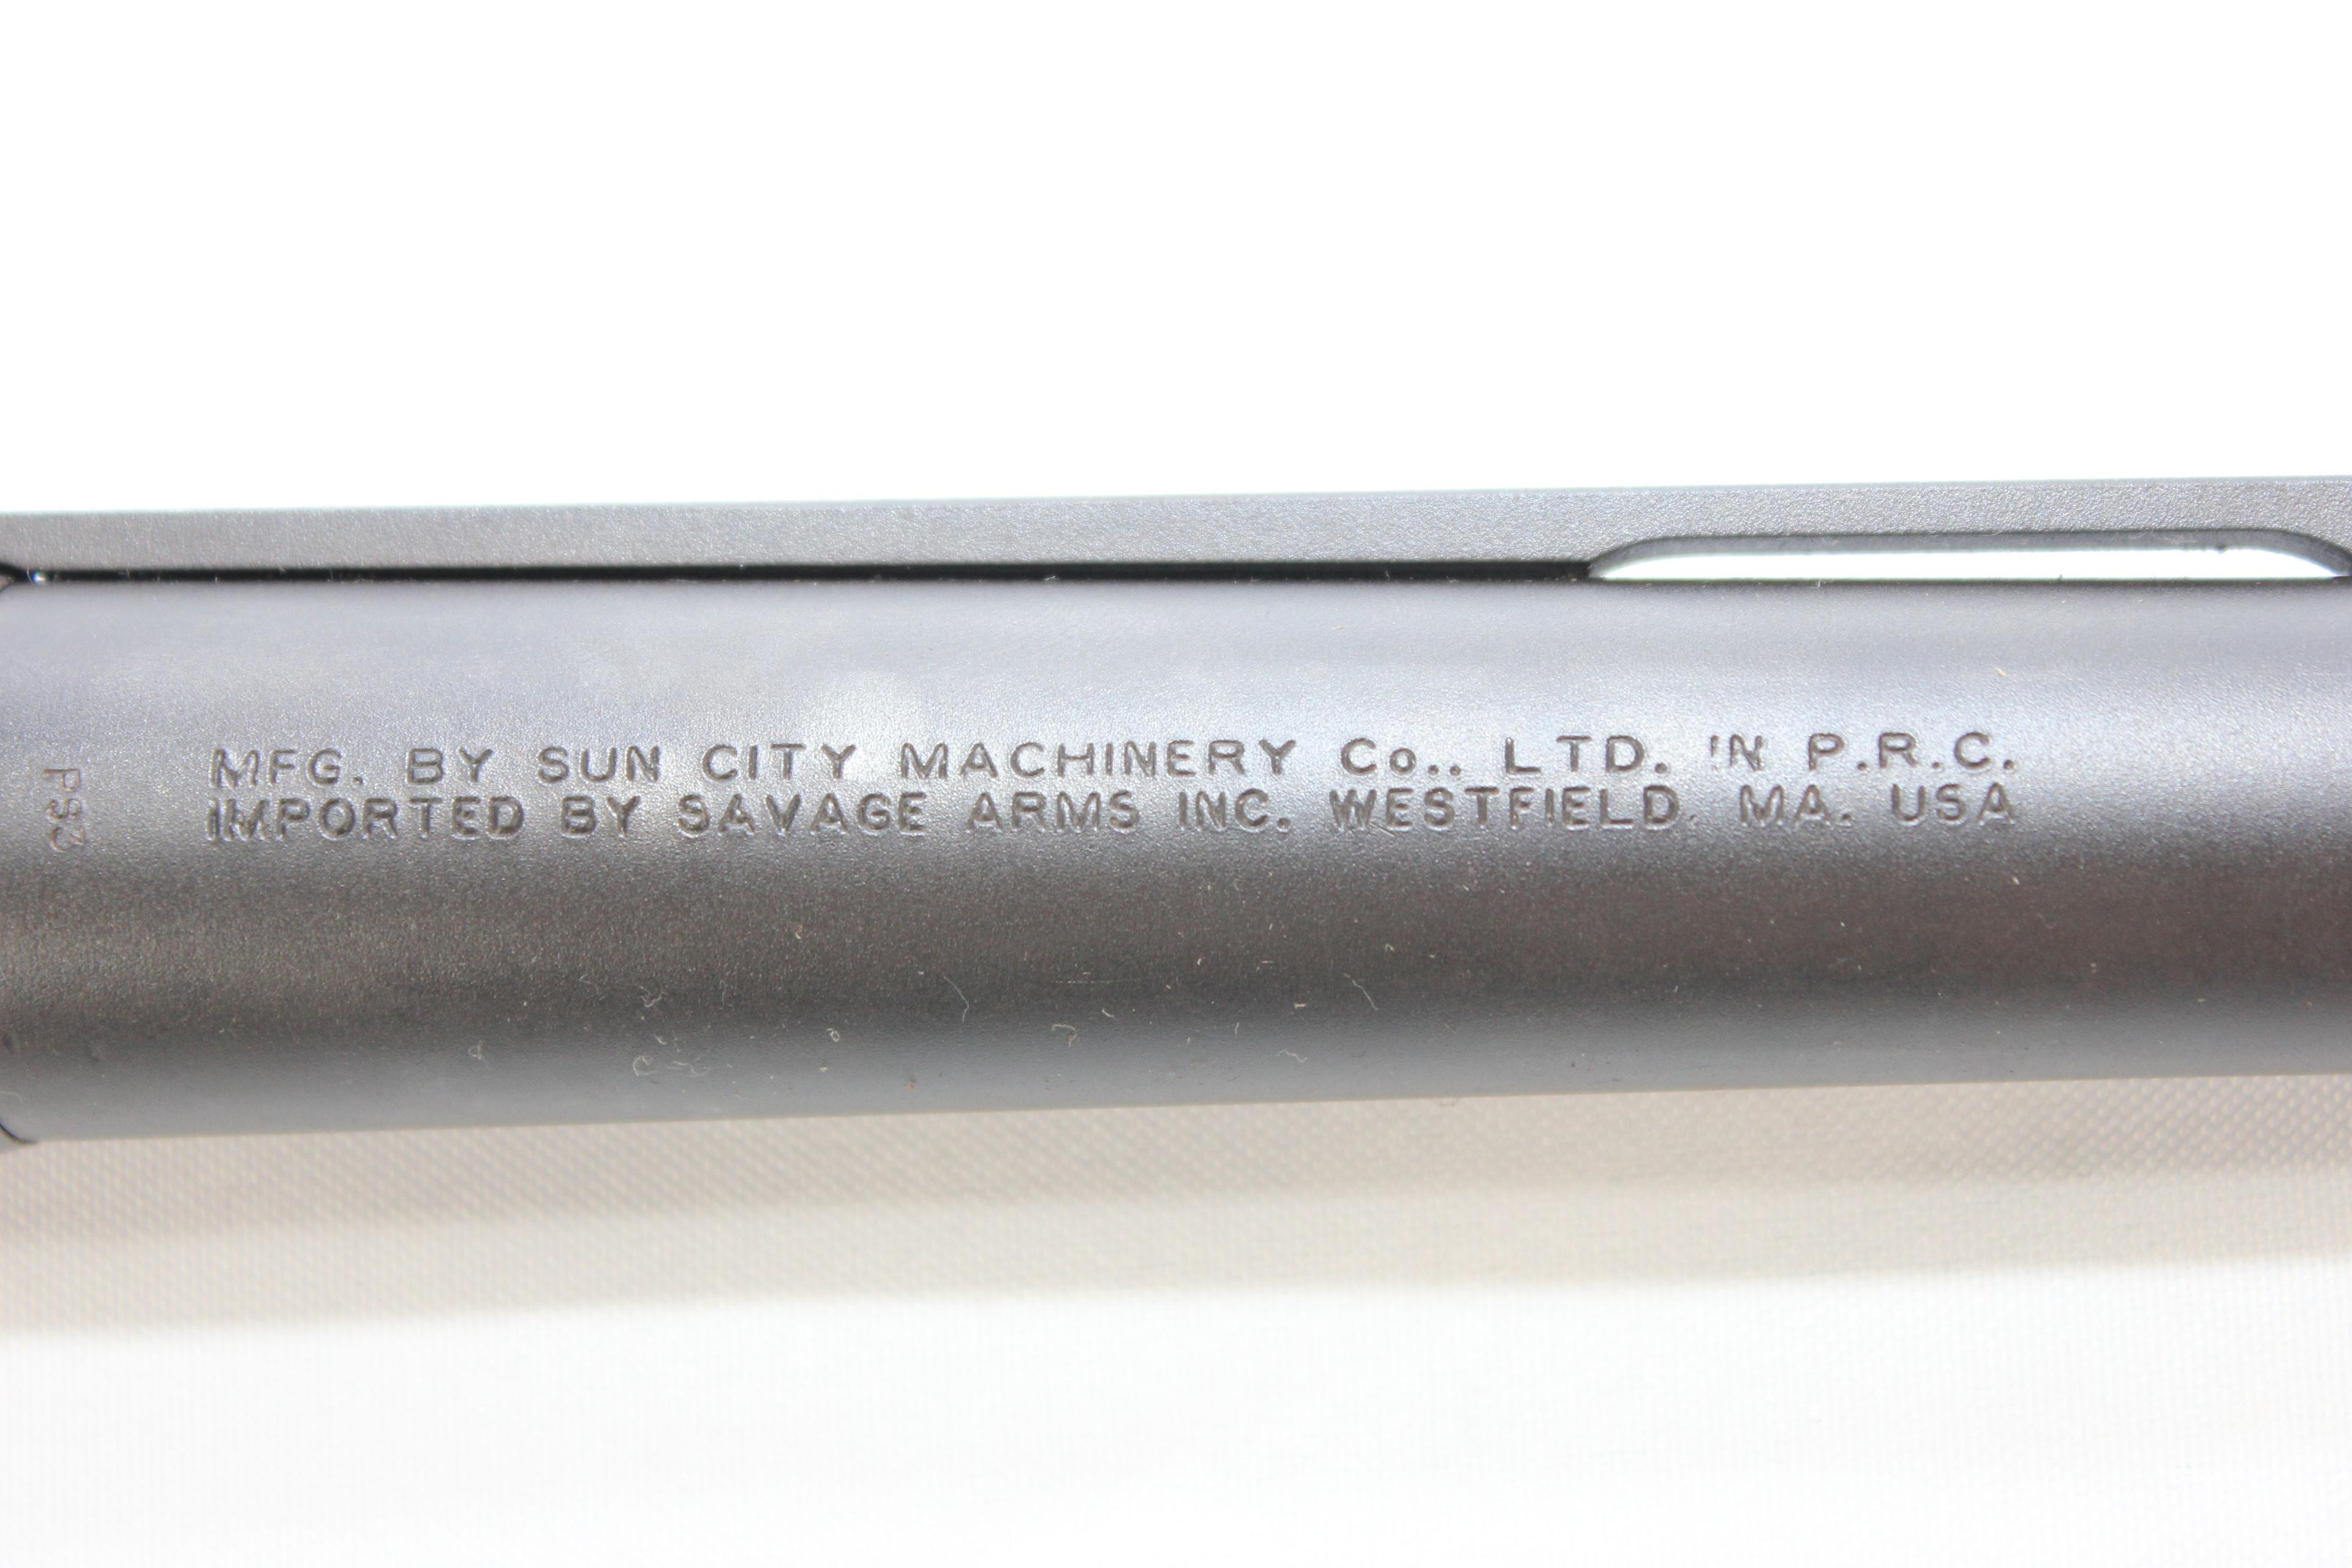 Stevens Model 320 Field Gauge 12 Ga. 2-3/4" or 3" Cham. Pump Action Shotgun w/26" Vent Rib BBL